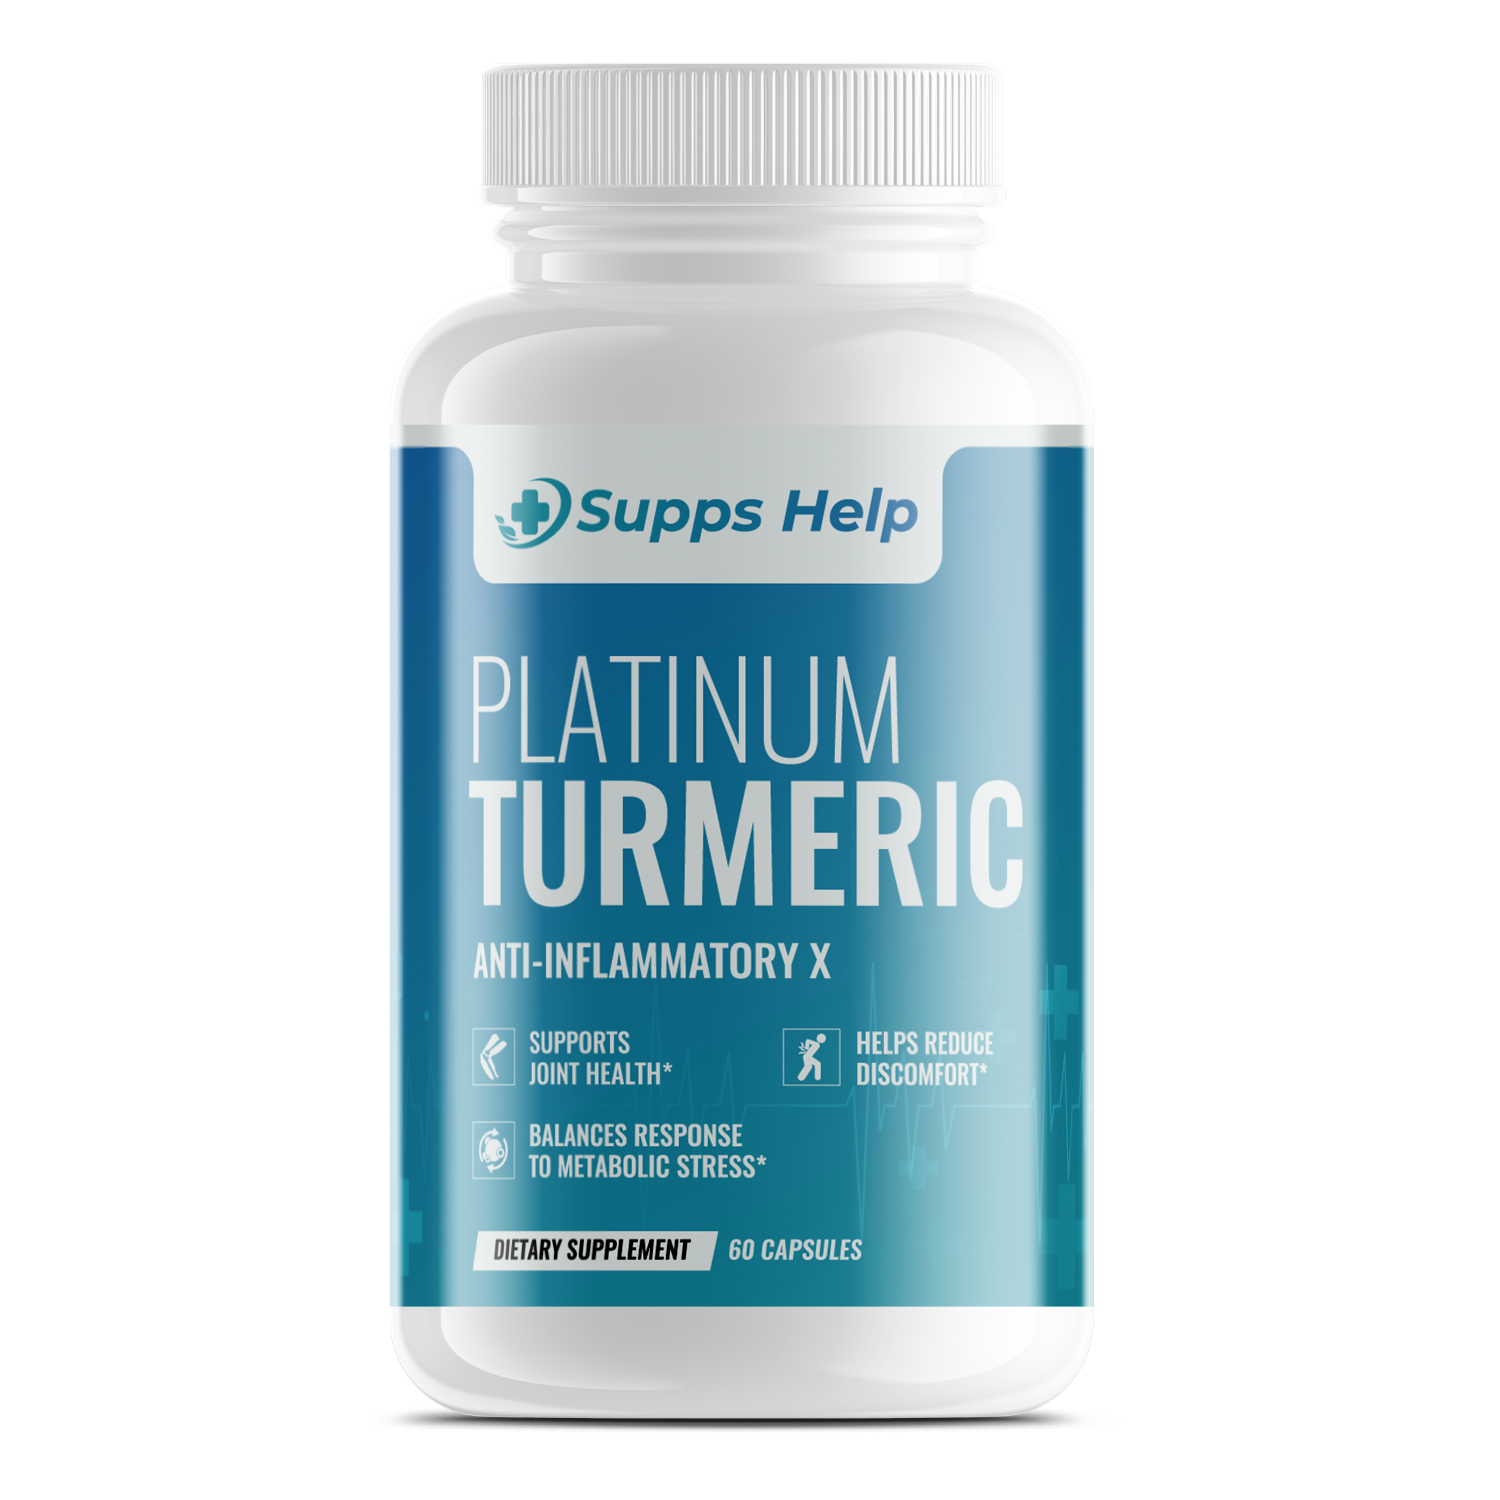 Platinum Turmeric Anti-Inflammatory X